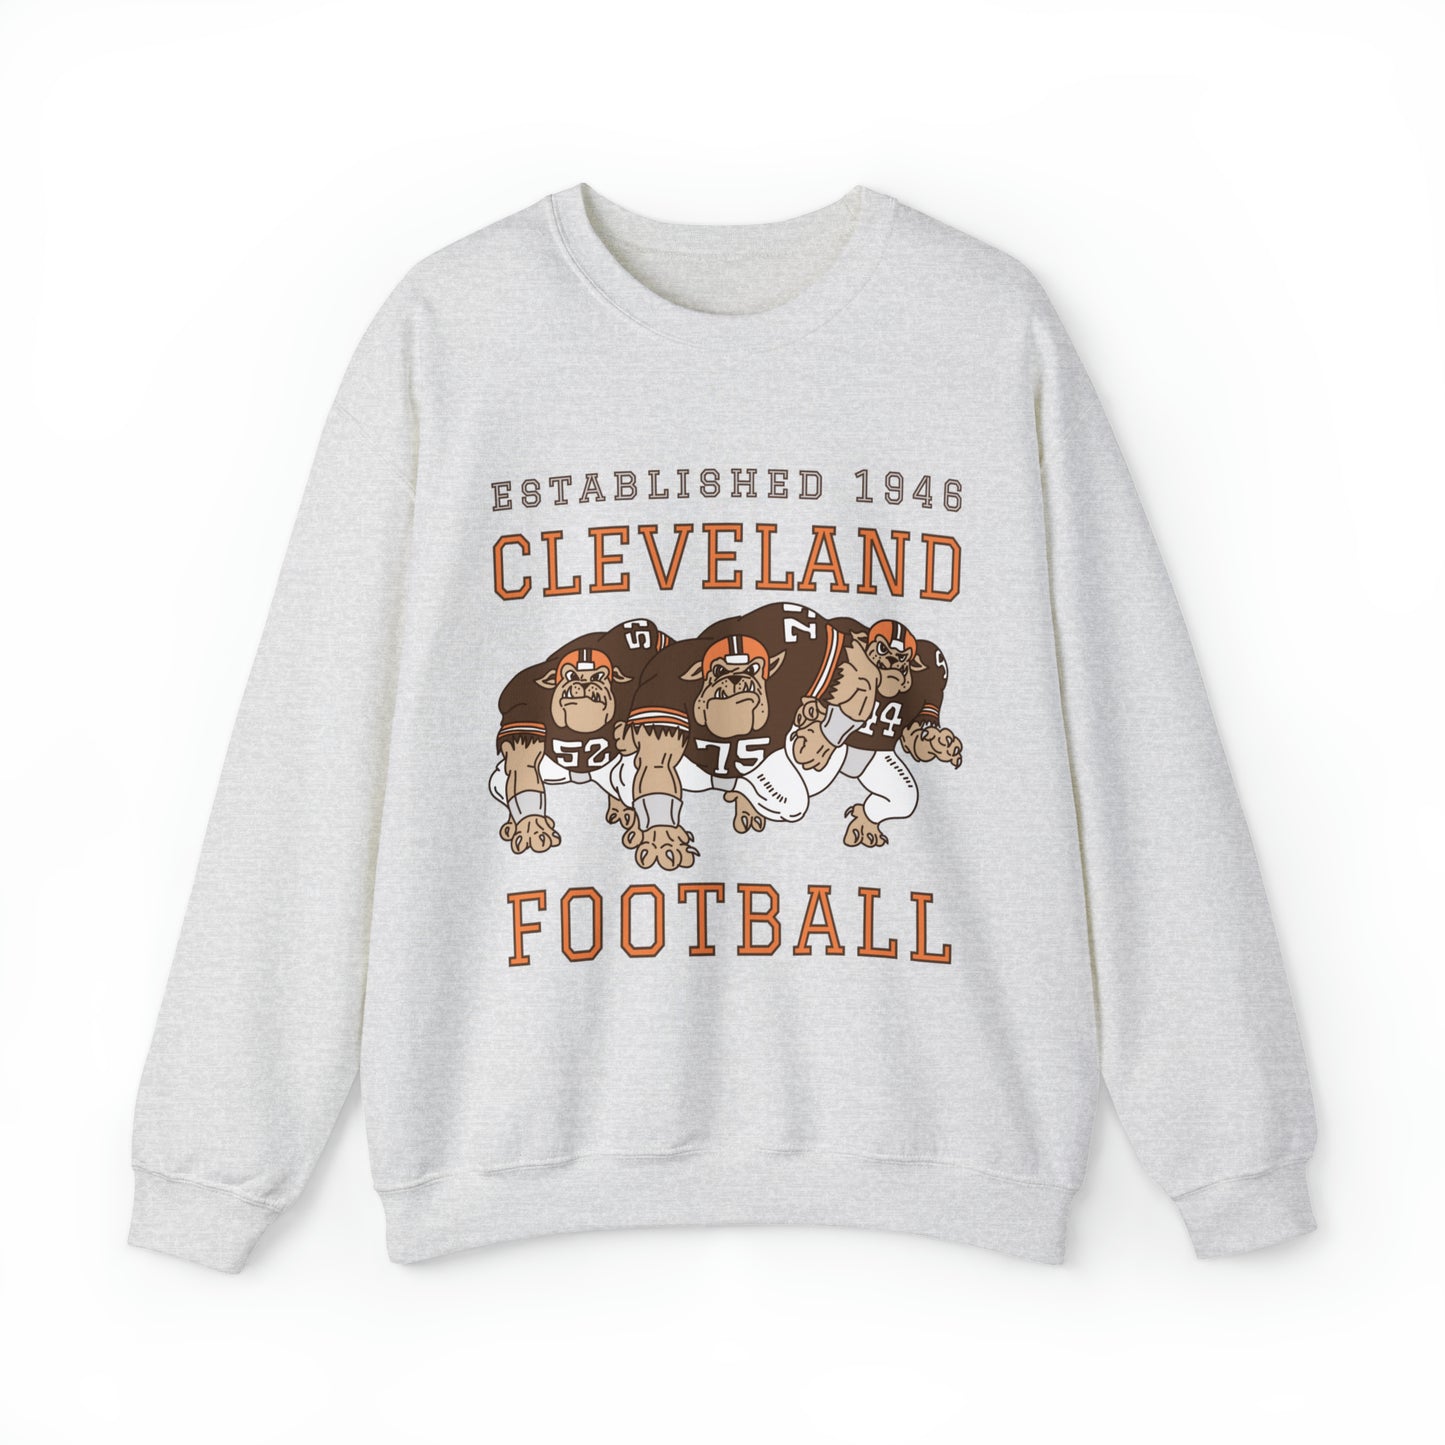 Vintage Cleveland Browns Crewneck - Browns Dawg Pound NFL Football Apparel - Men's & Women's Sweatshirt White